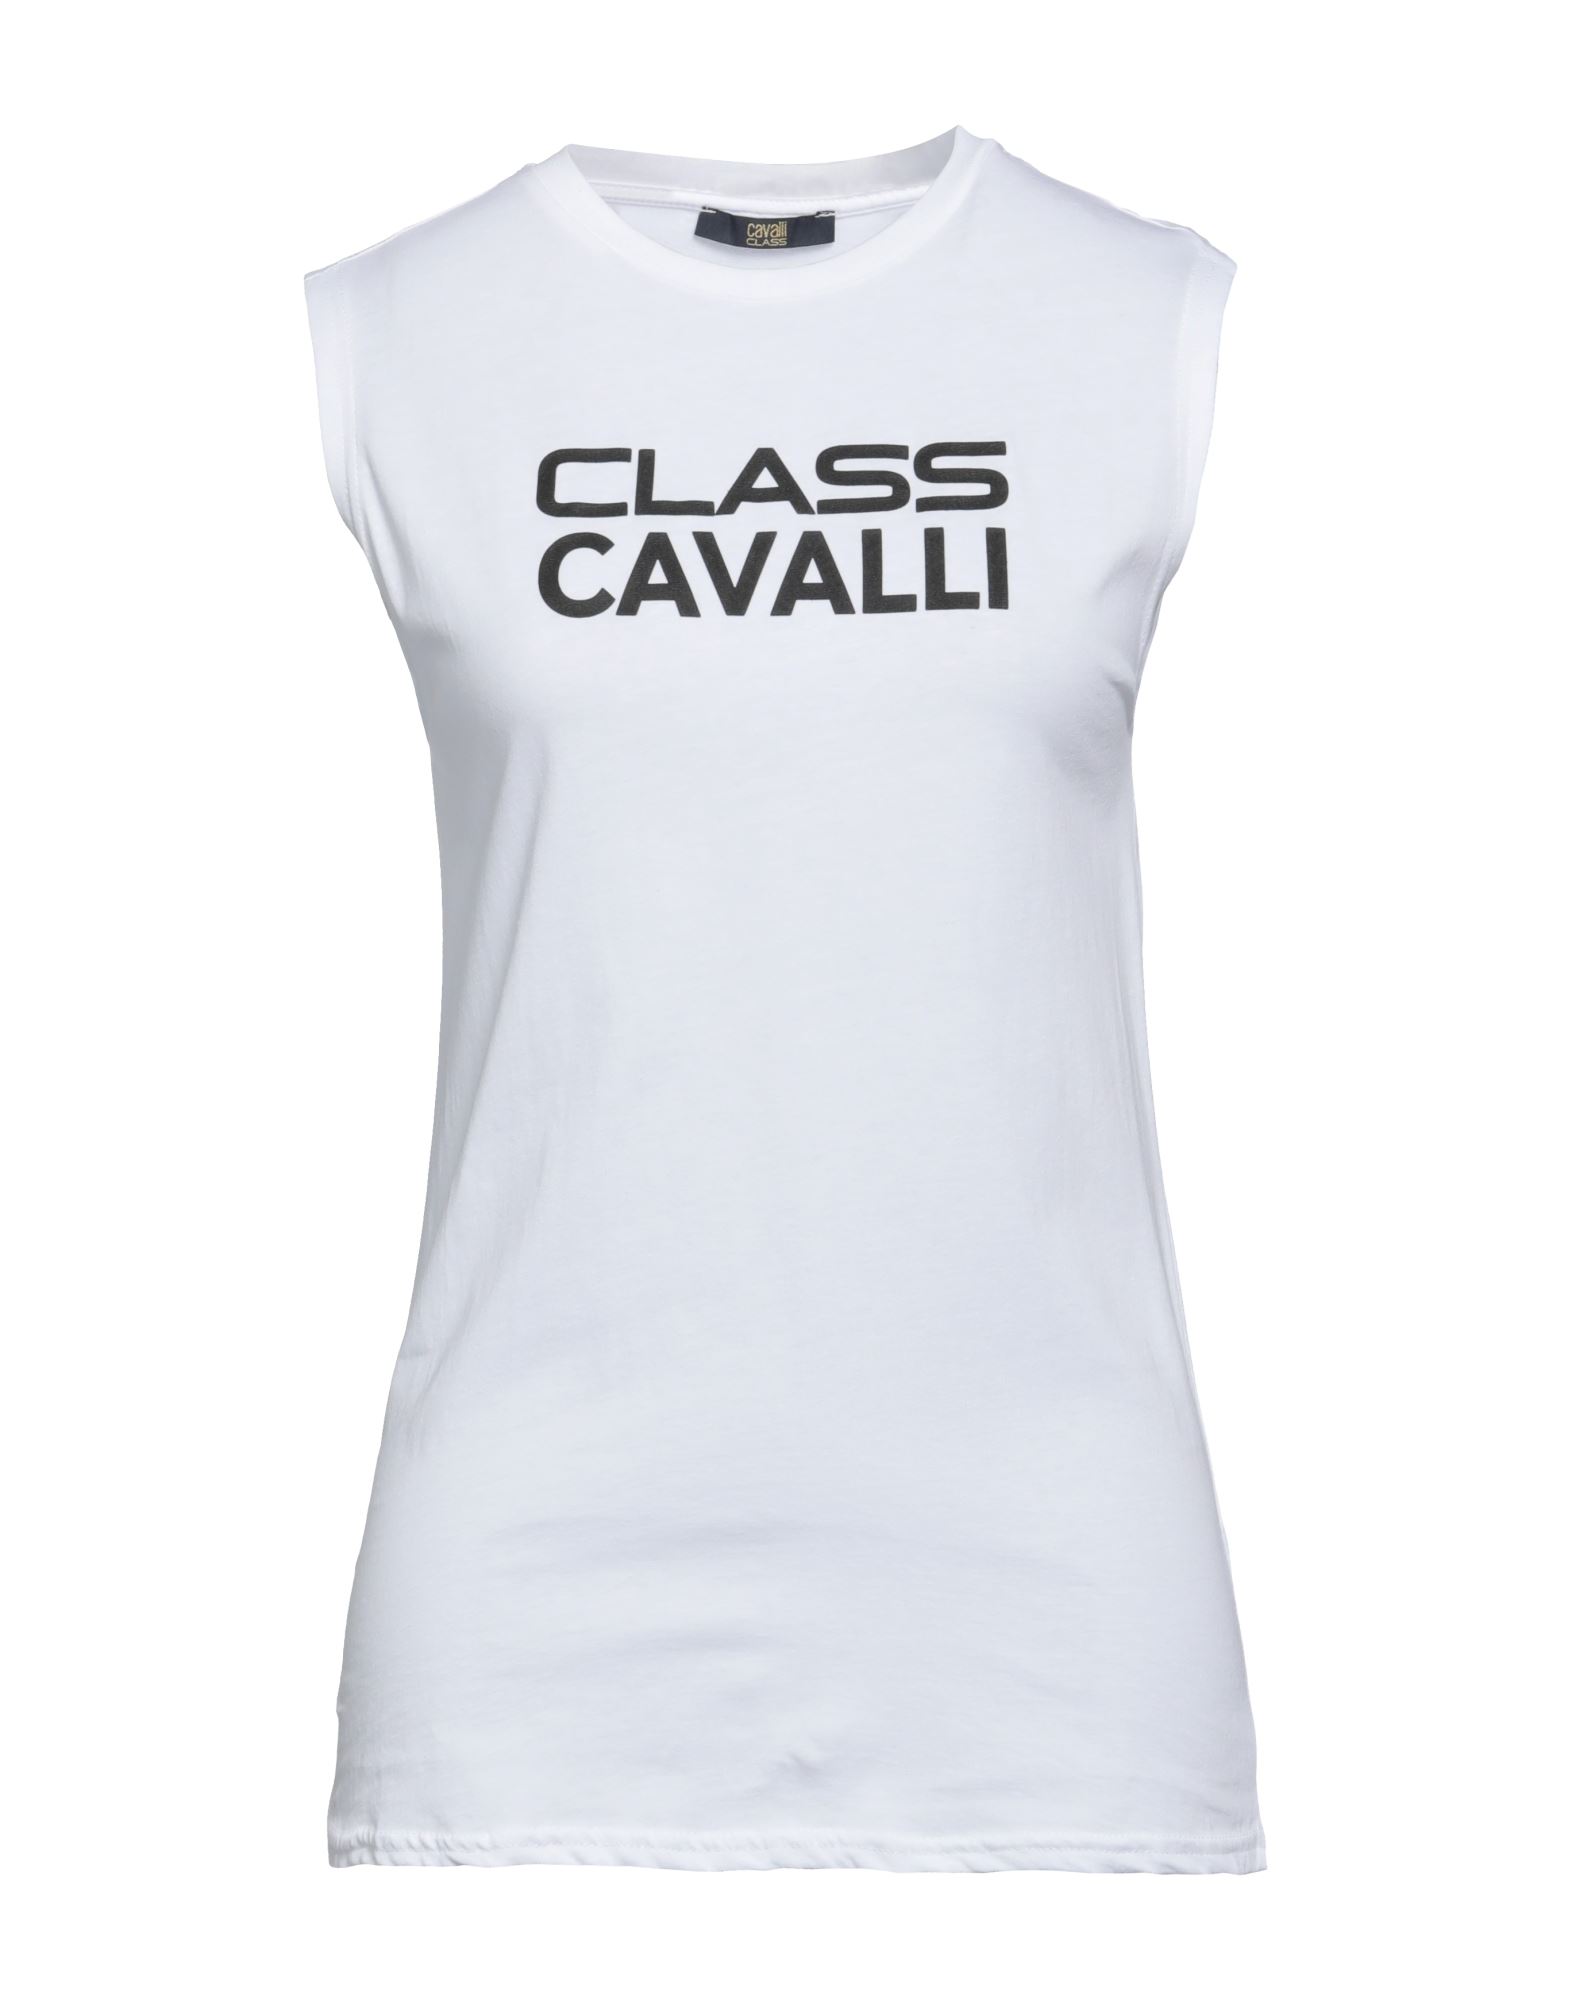 Cavalli Class T-shirts In White